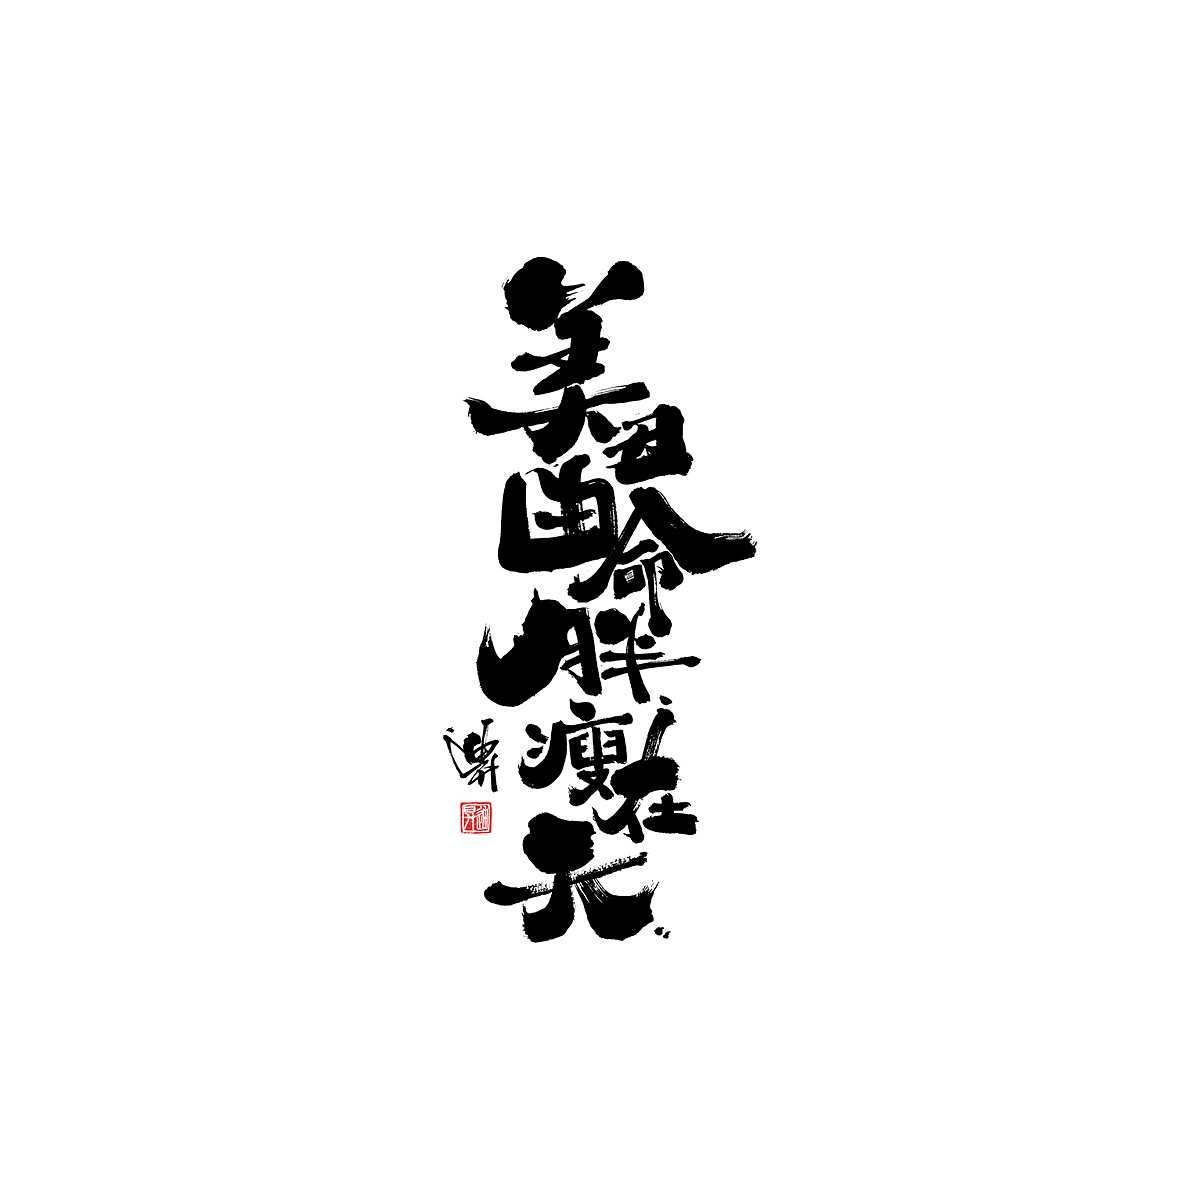 Chinese Creative Font Design-Humorous black brush font design